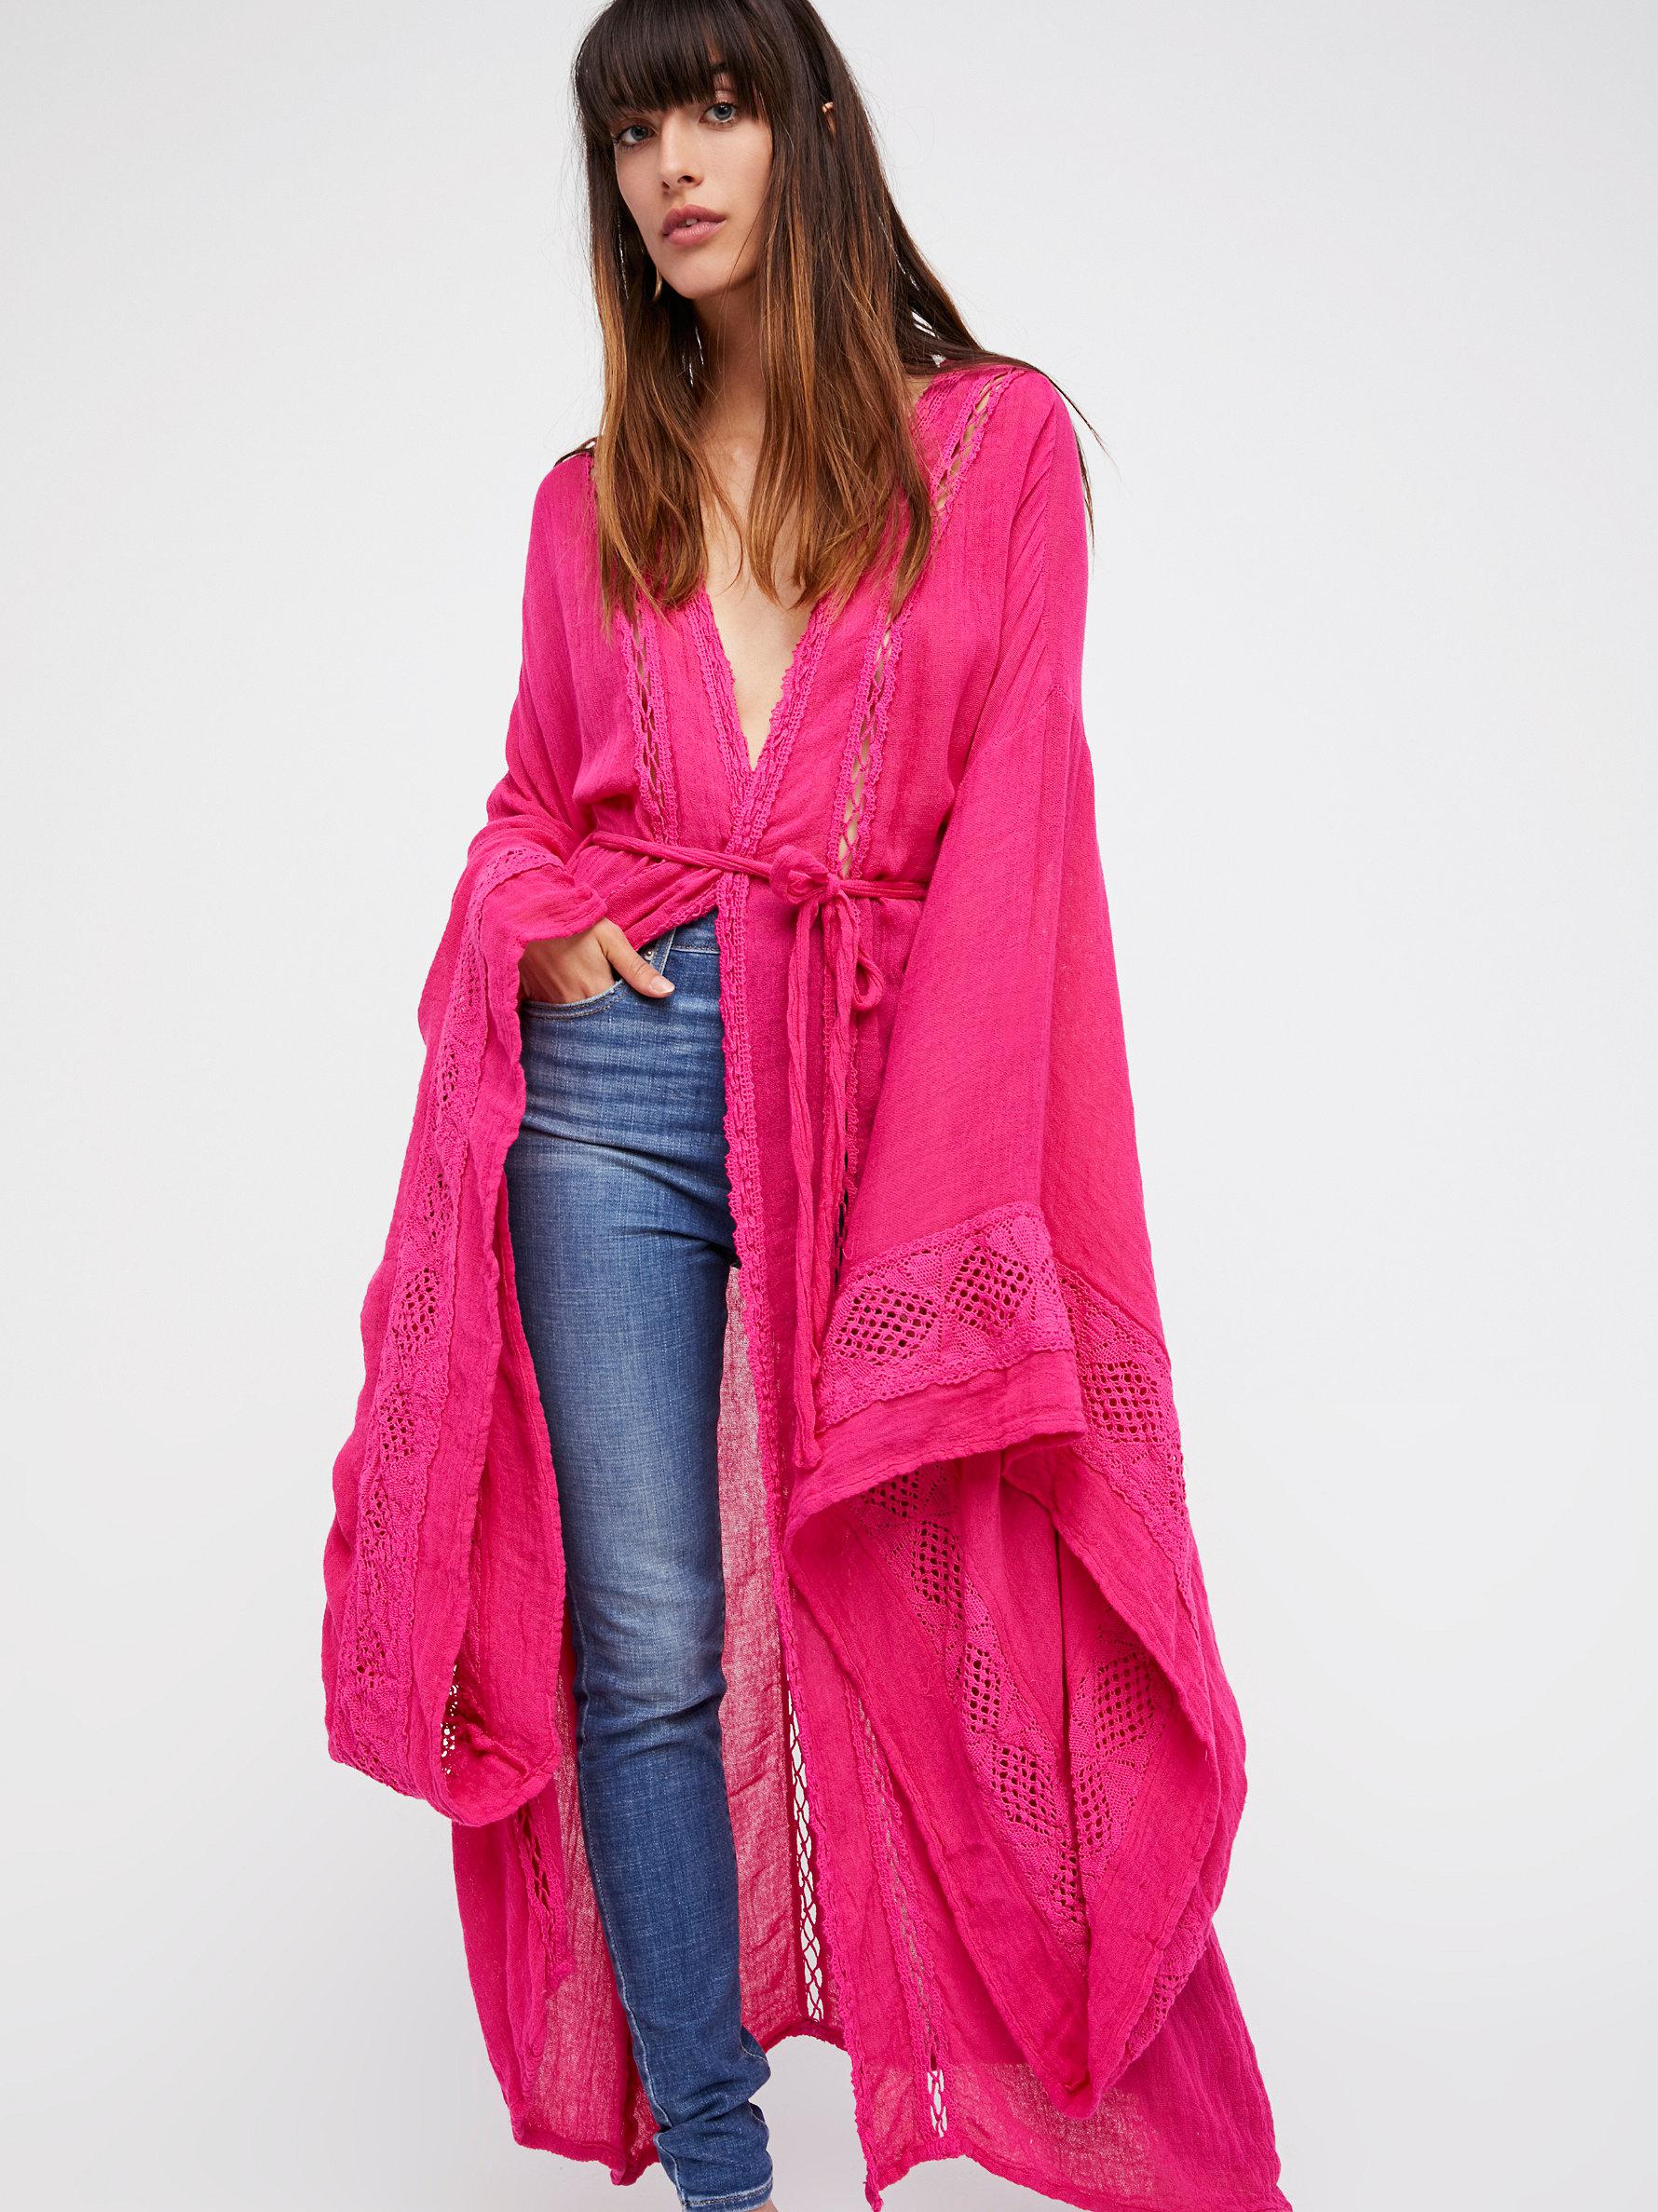 Free People Cotton Wood Creek Kimono in Hot Pink (Pink) - Lyst